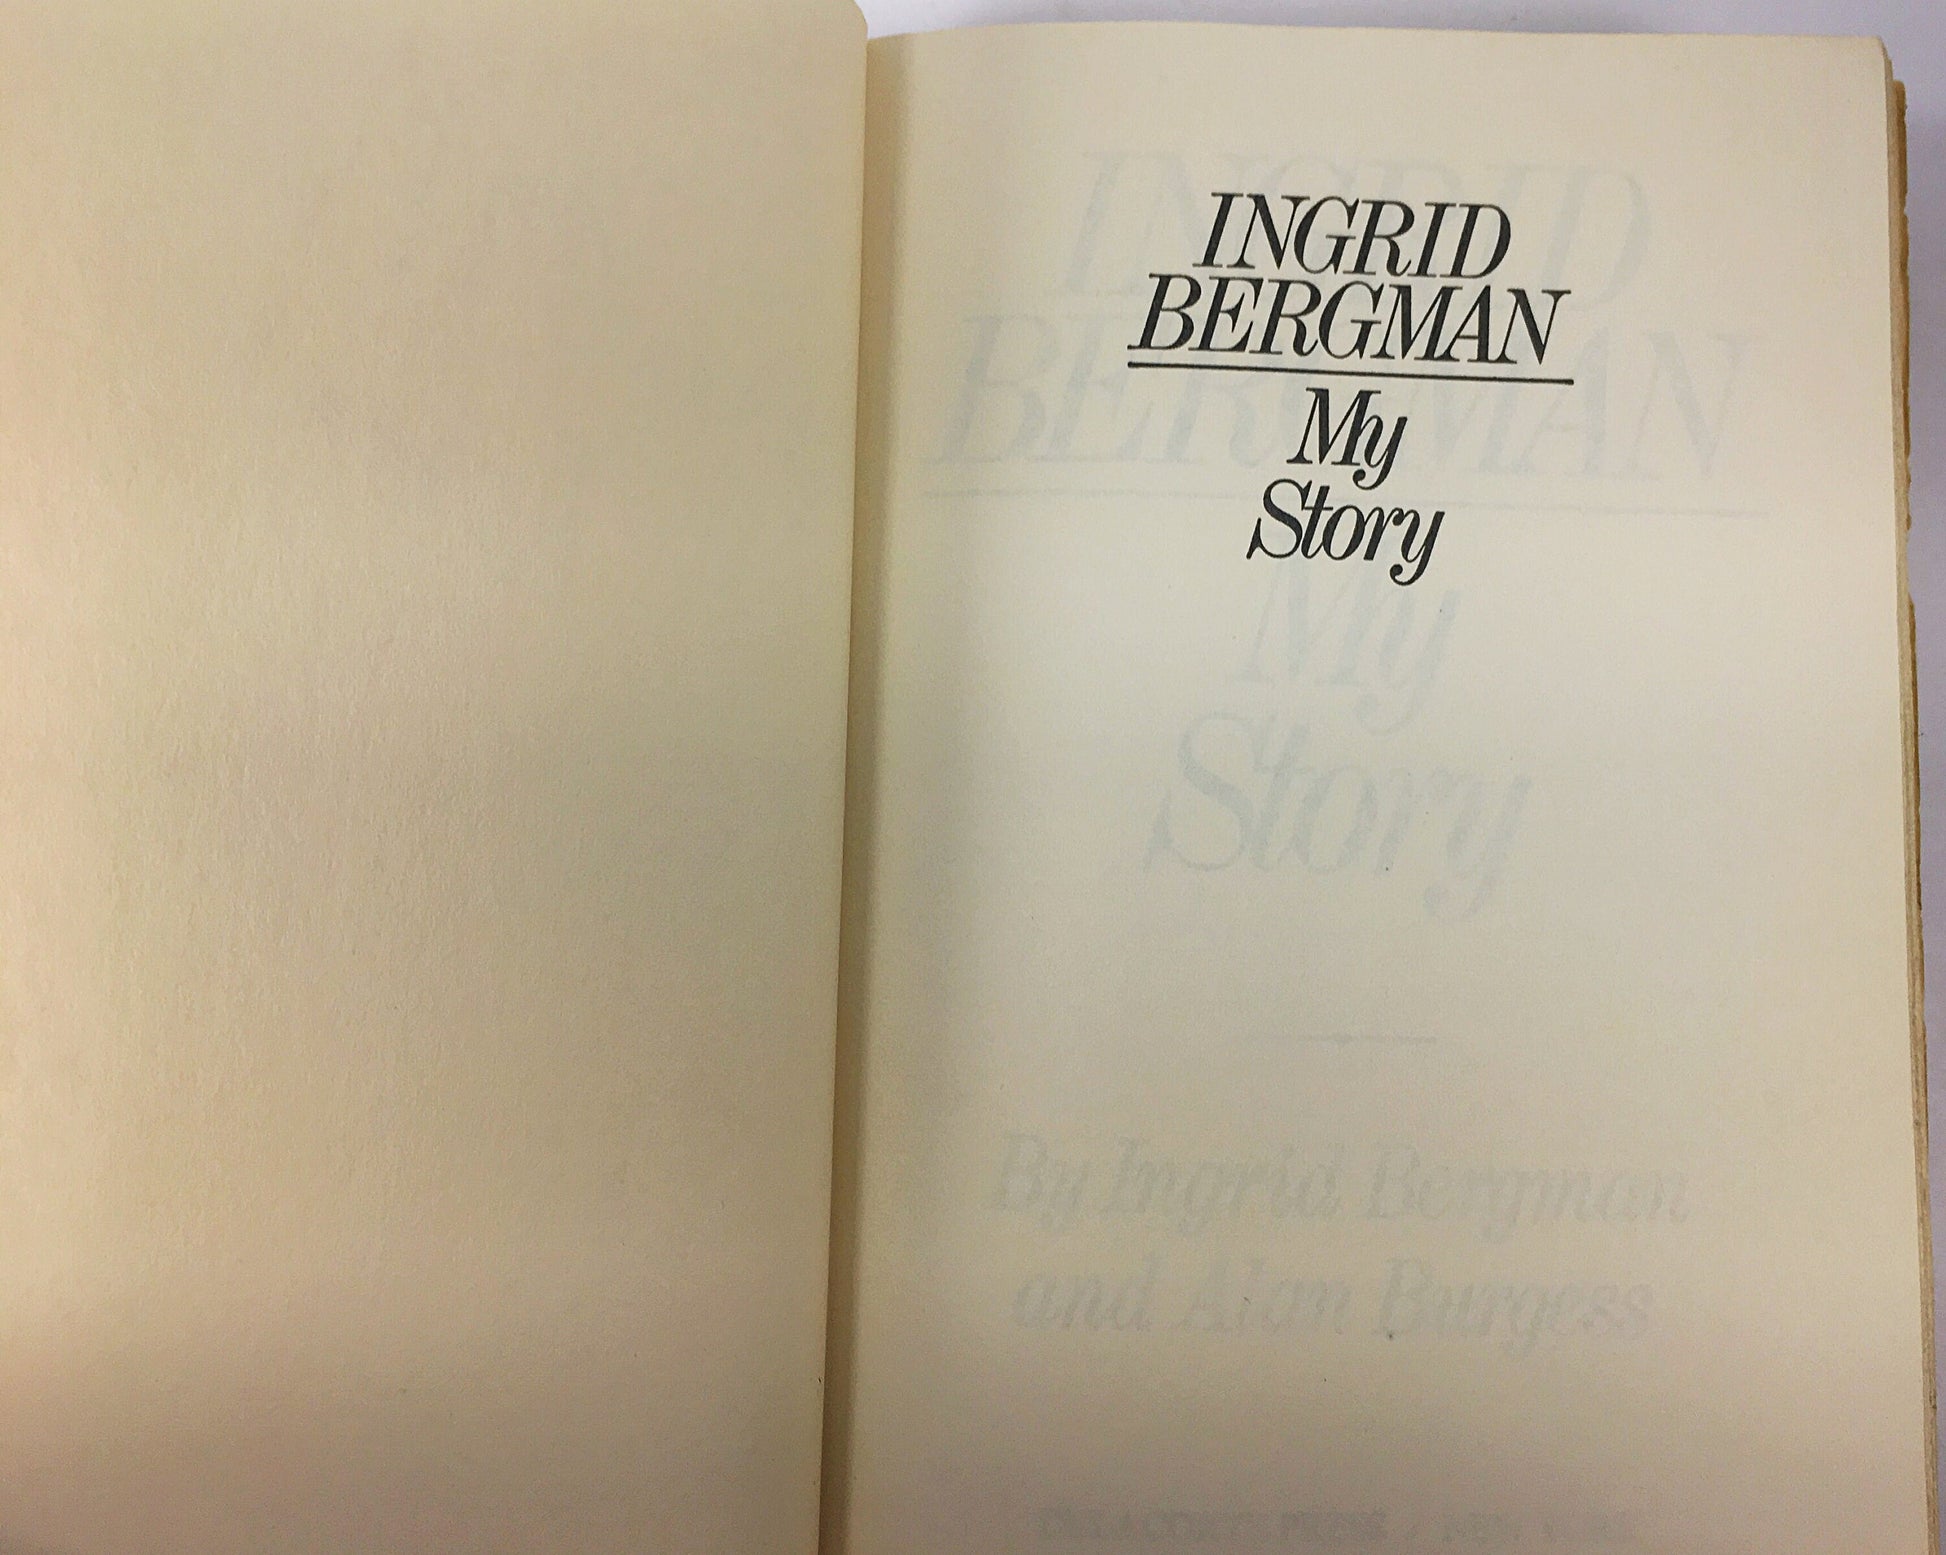 Ingrid Bergman, My Story. Vintage biography circa 1980. Exposé about Ingrid Bergman, Hollywood's greatest leading actress. Book gift